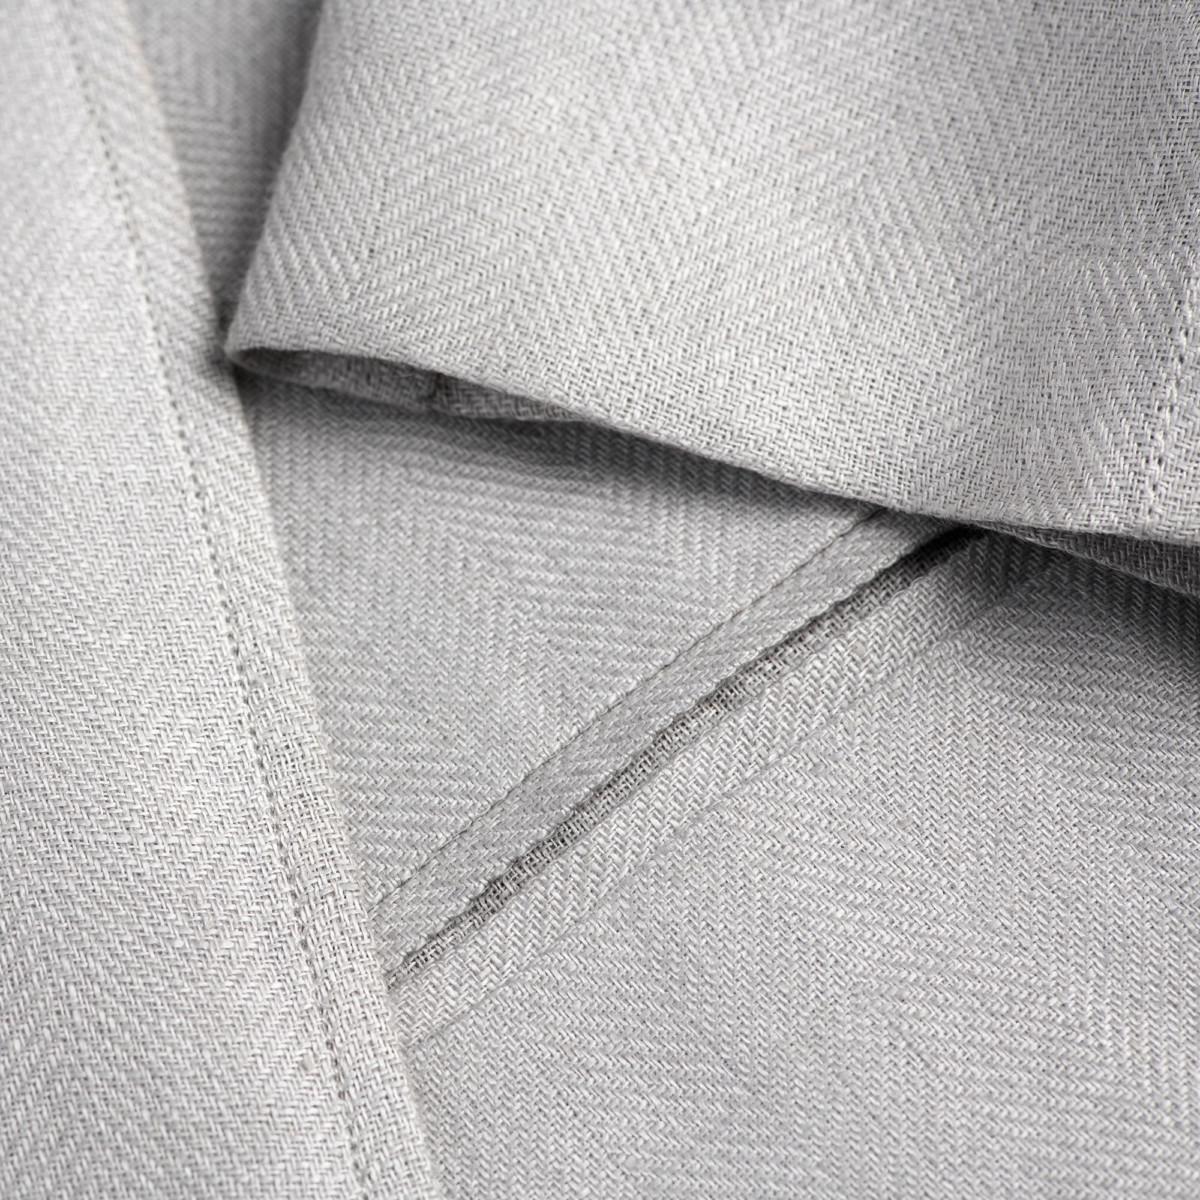 Giacca Sud Man 100% Capri light grey linen jacket detail